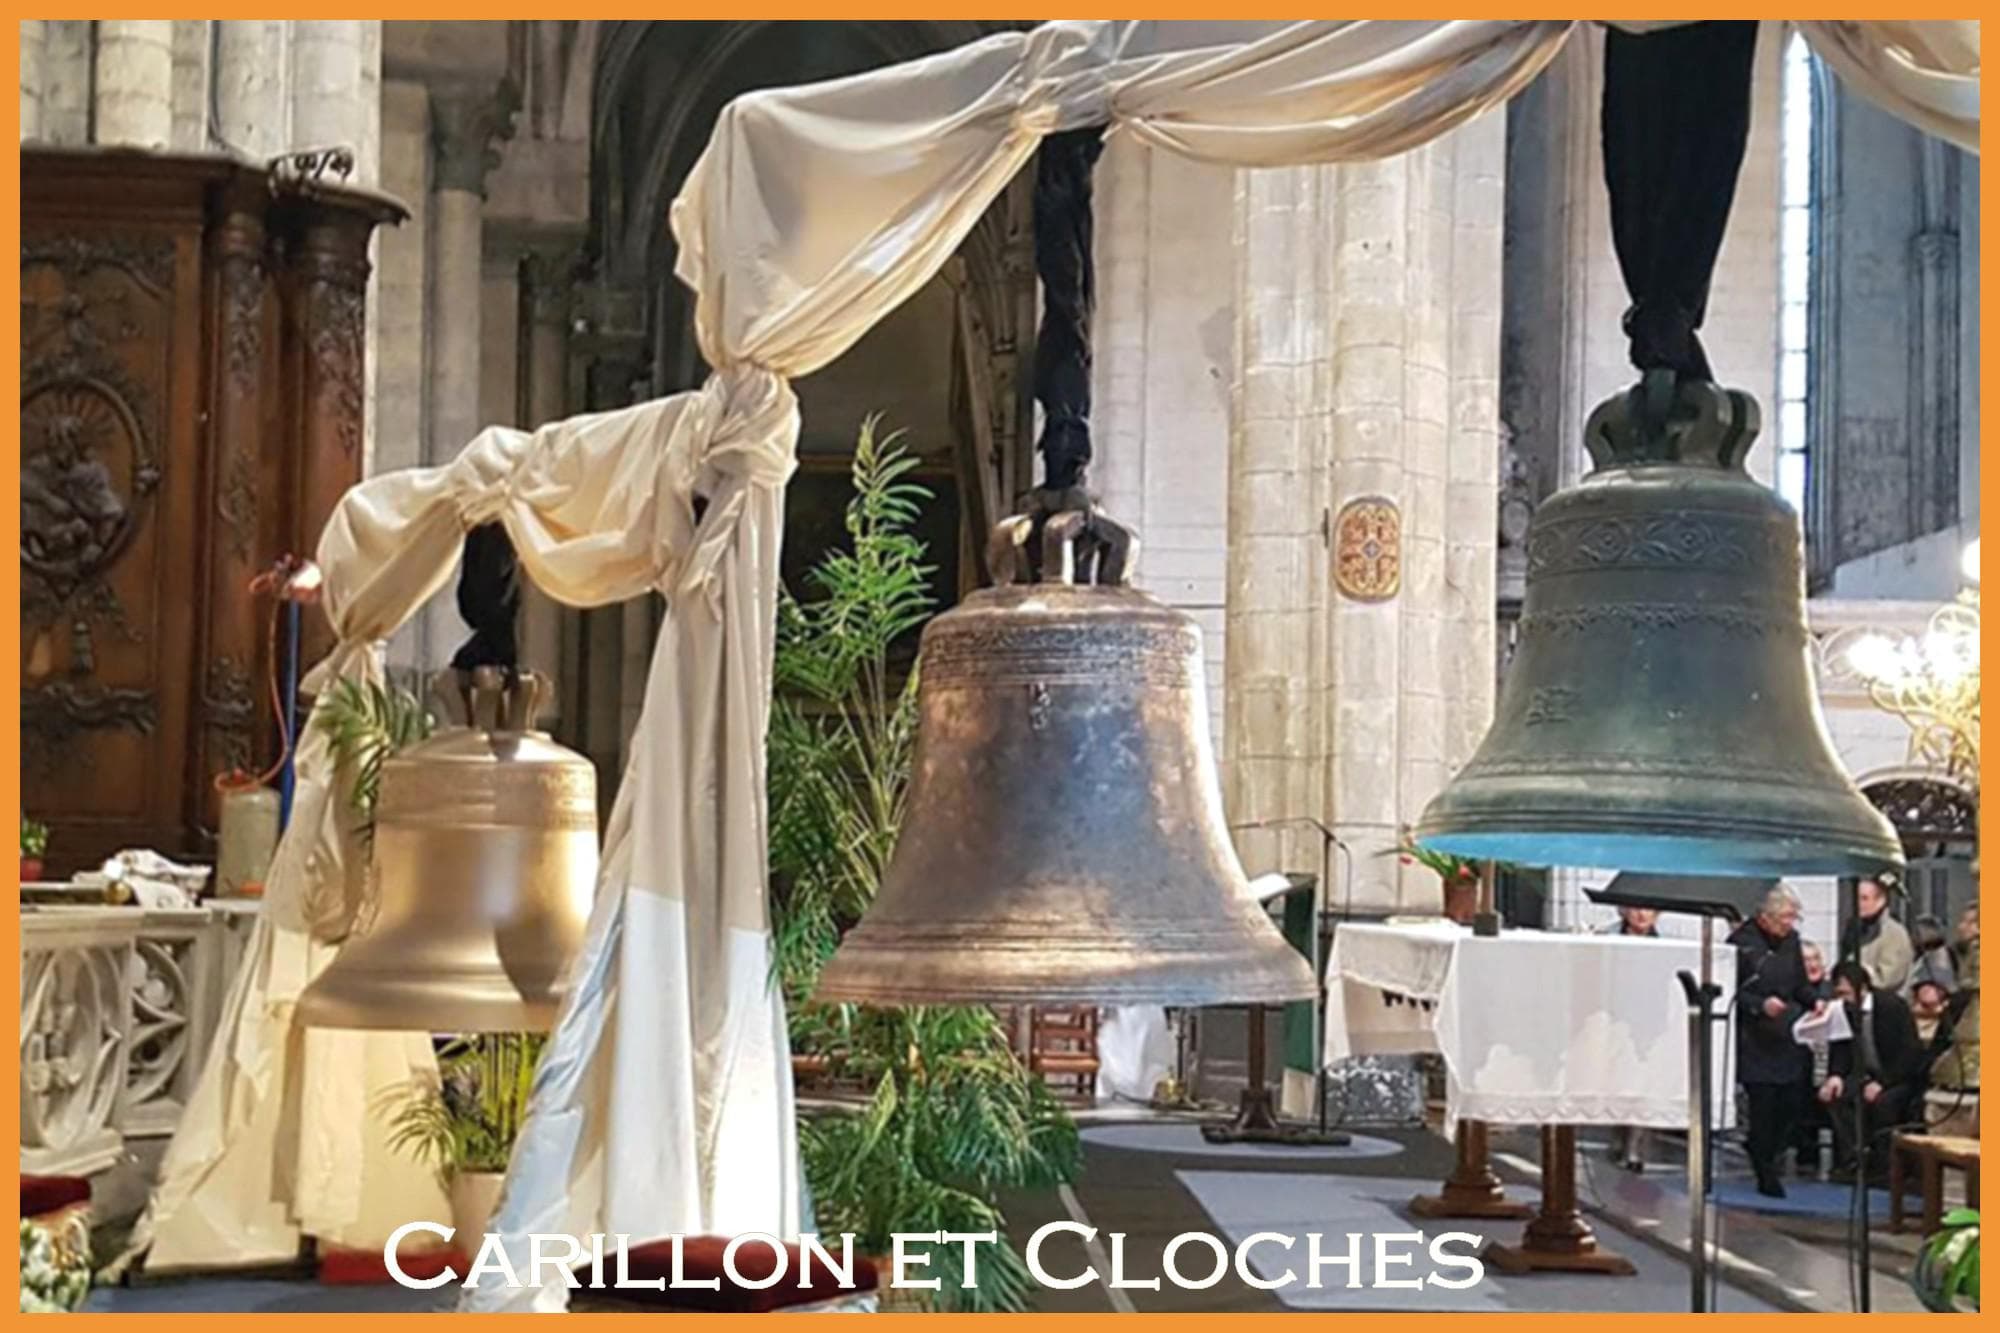 choches, carillon cathédrale de saint-omer